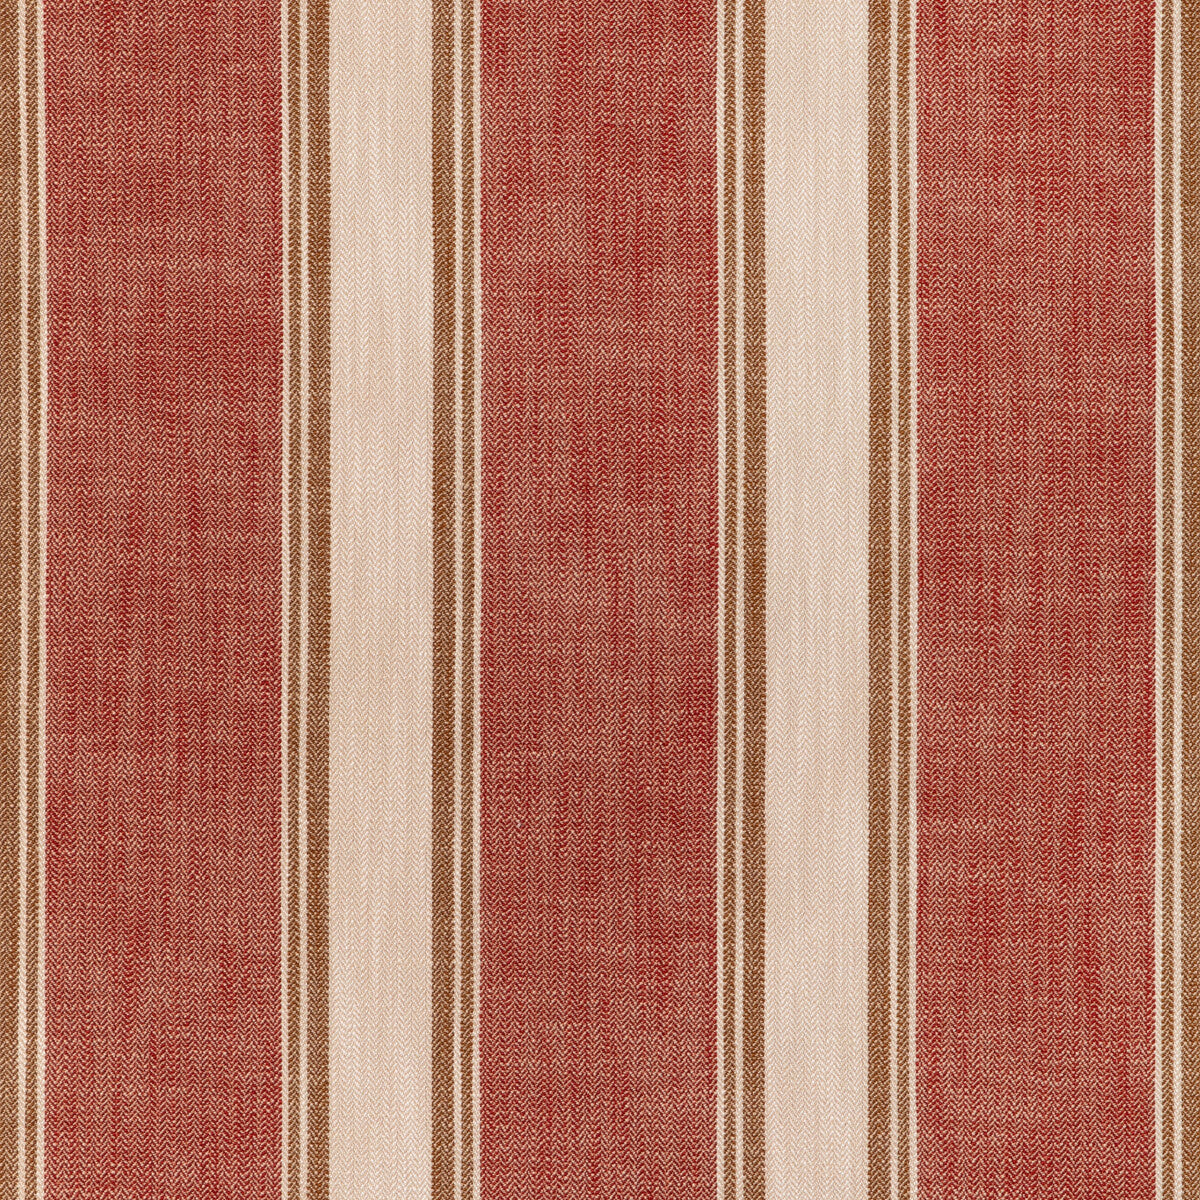 La Riviera Stripe fabric in spice color - pattern 8024120.924.0 - by Brunschwig &amp; Fils in the Les Ensembliers L&